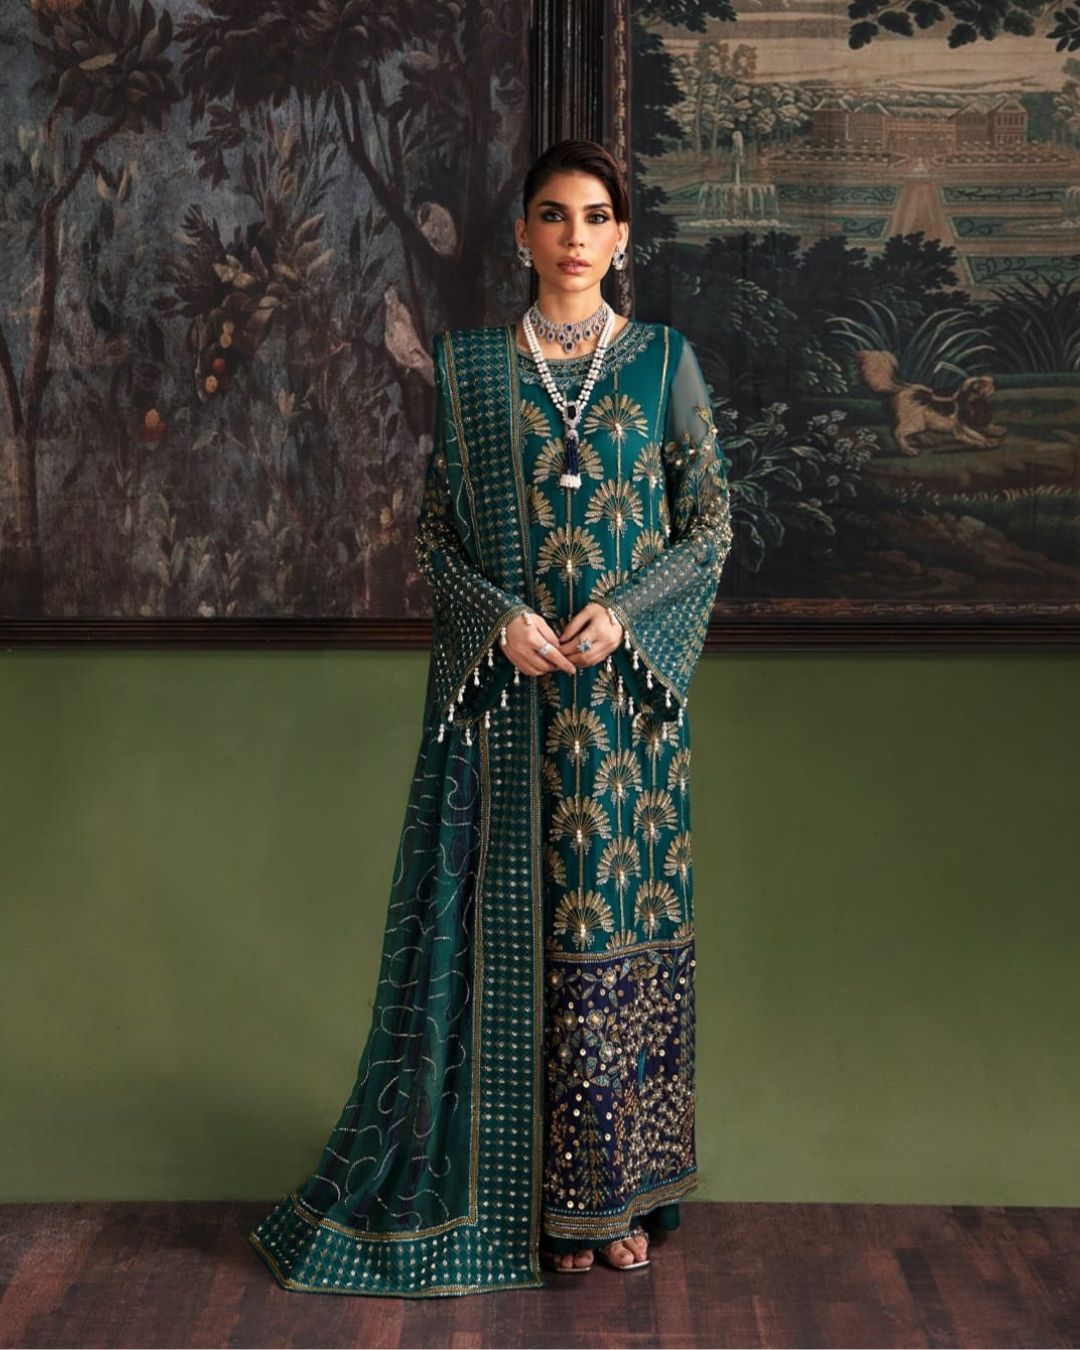 How to Choose the Perfect Pakistani Semi-Formal Dress